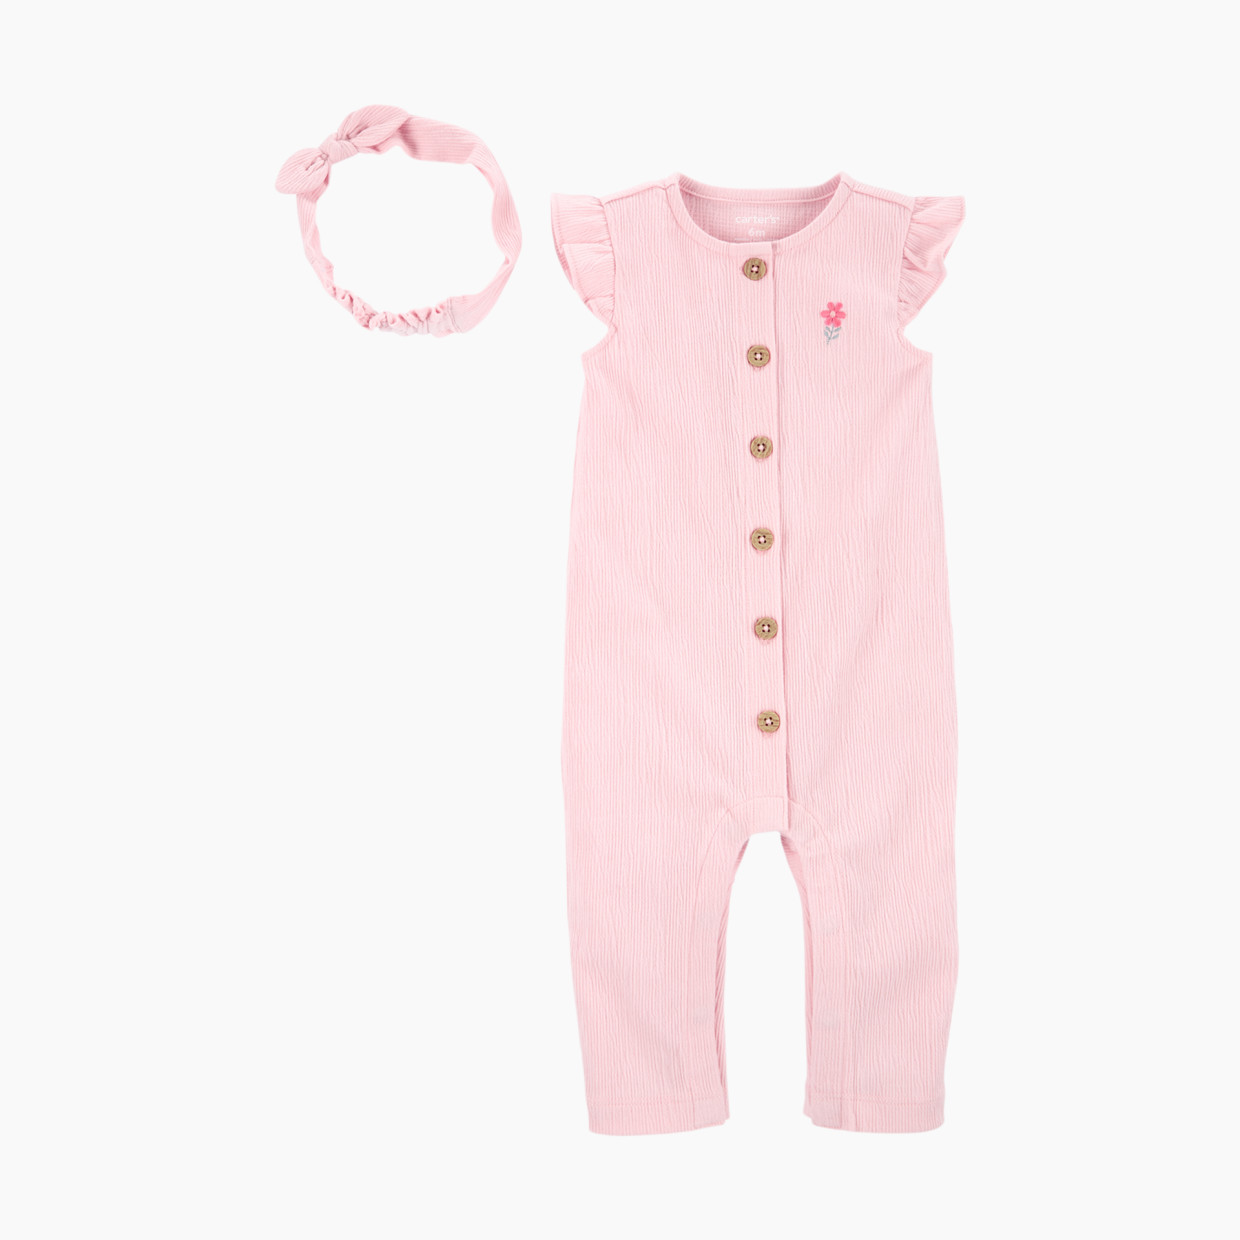 Carter's Crinkle Jersey Jumpsuit & Headwrap (2 Piece) - Pink, 3 M.